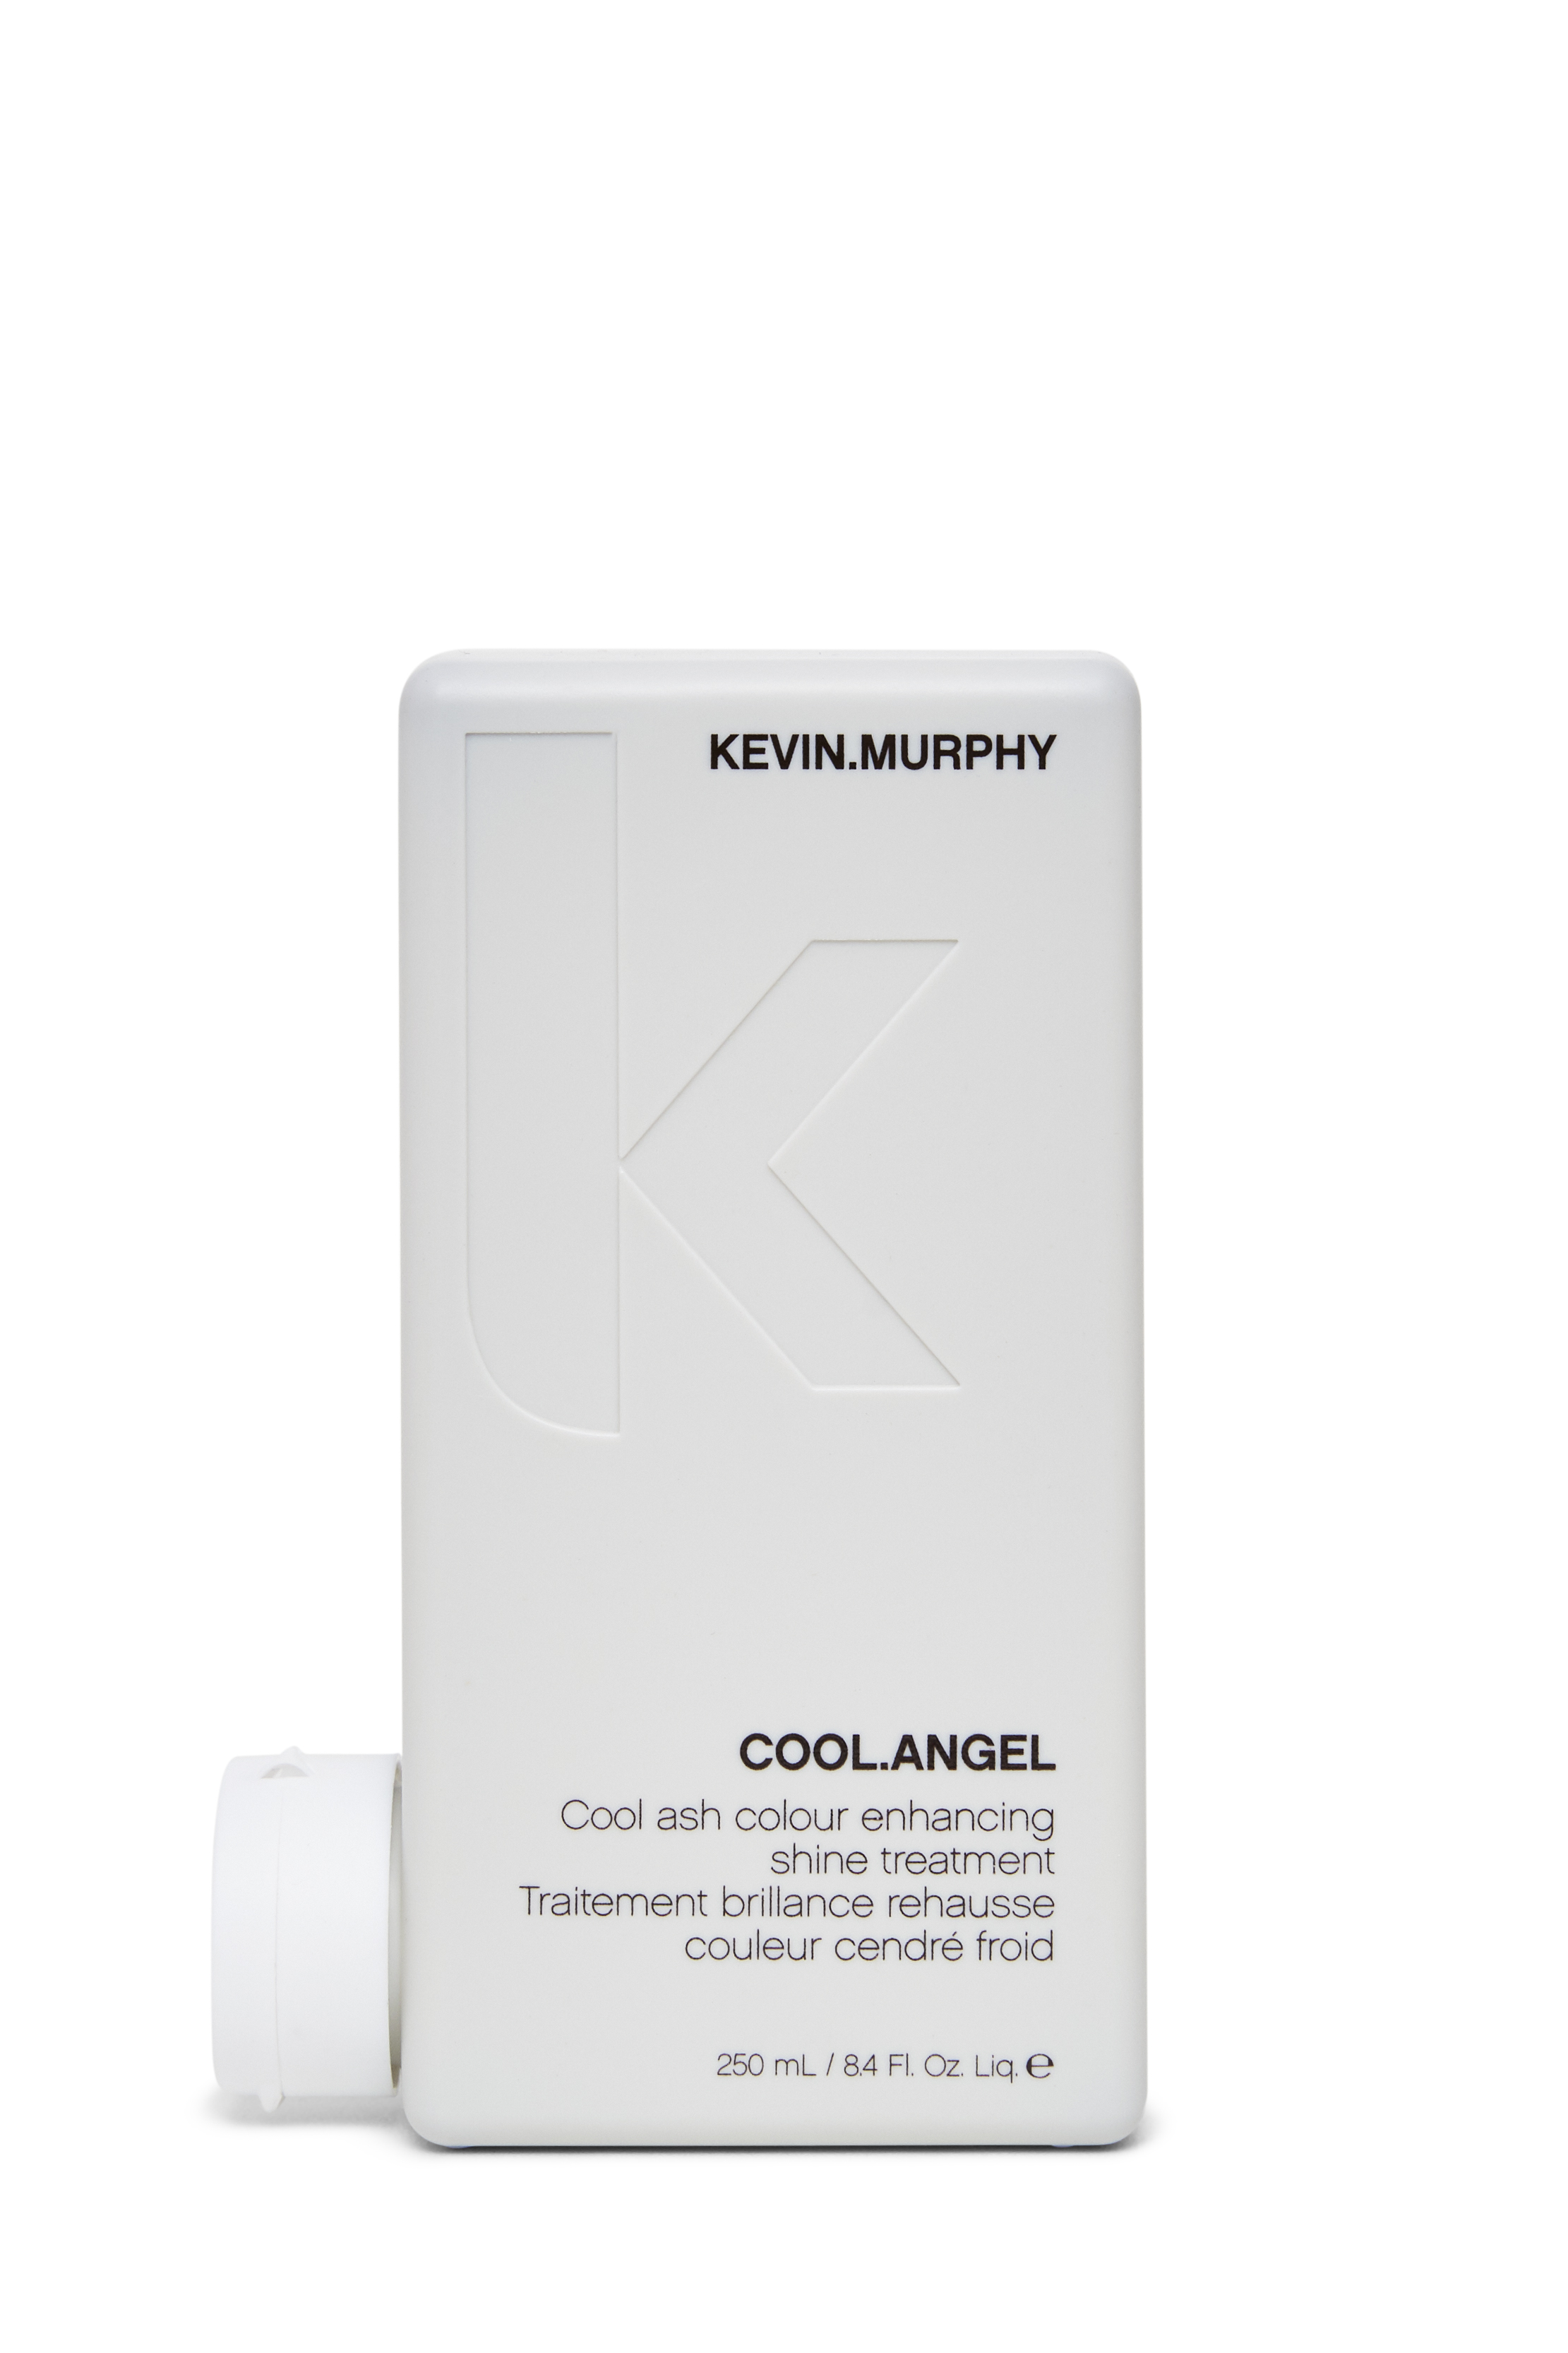 Kevin.Murphy COOL.ANGEL 250ml